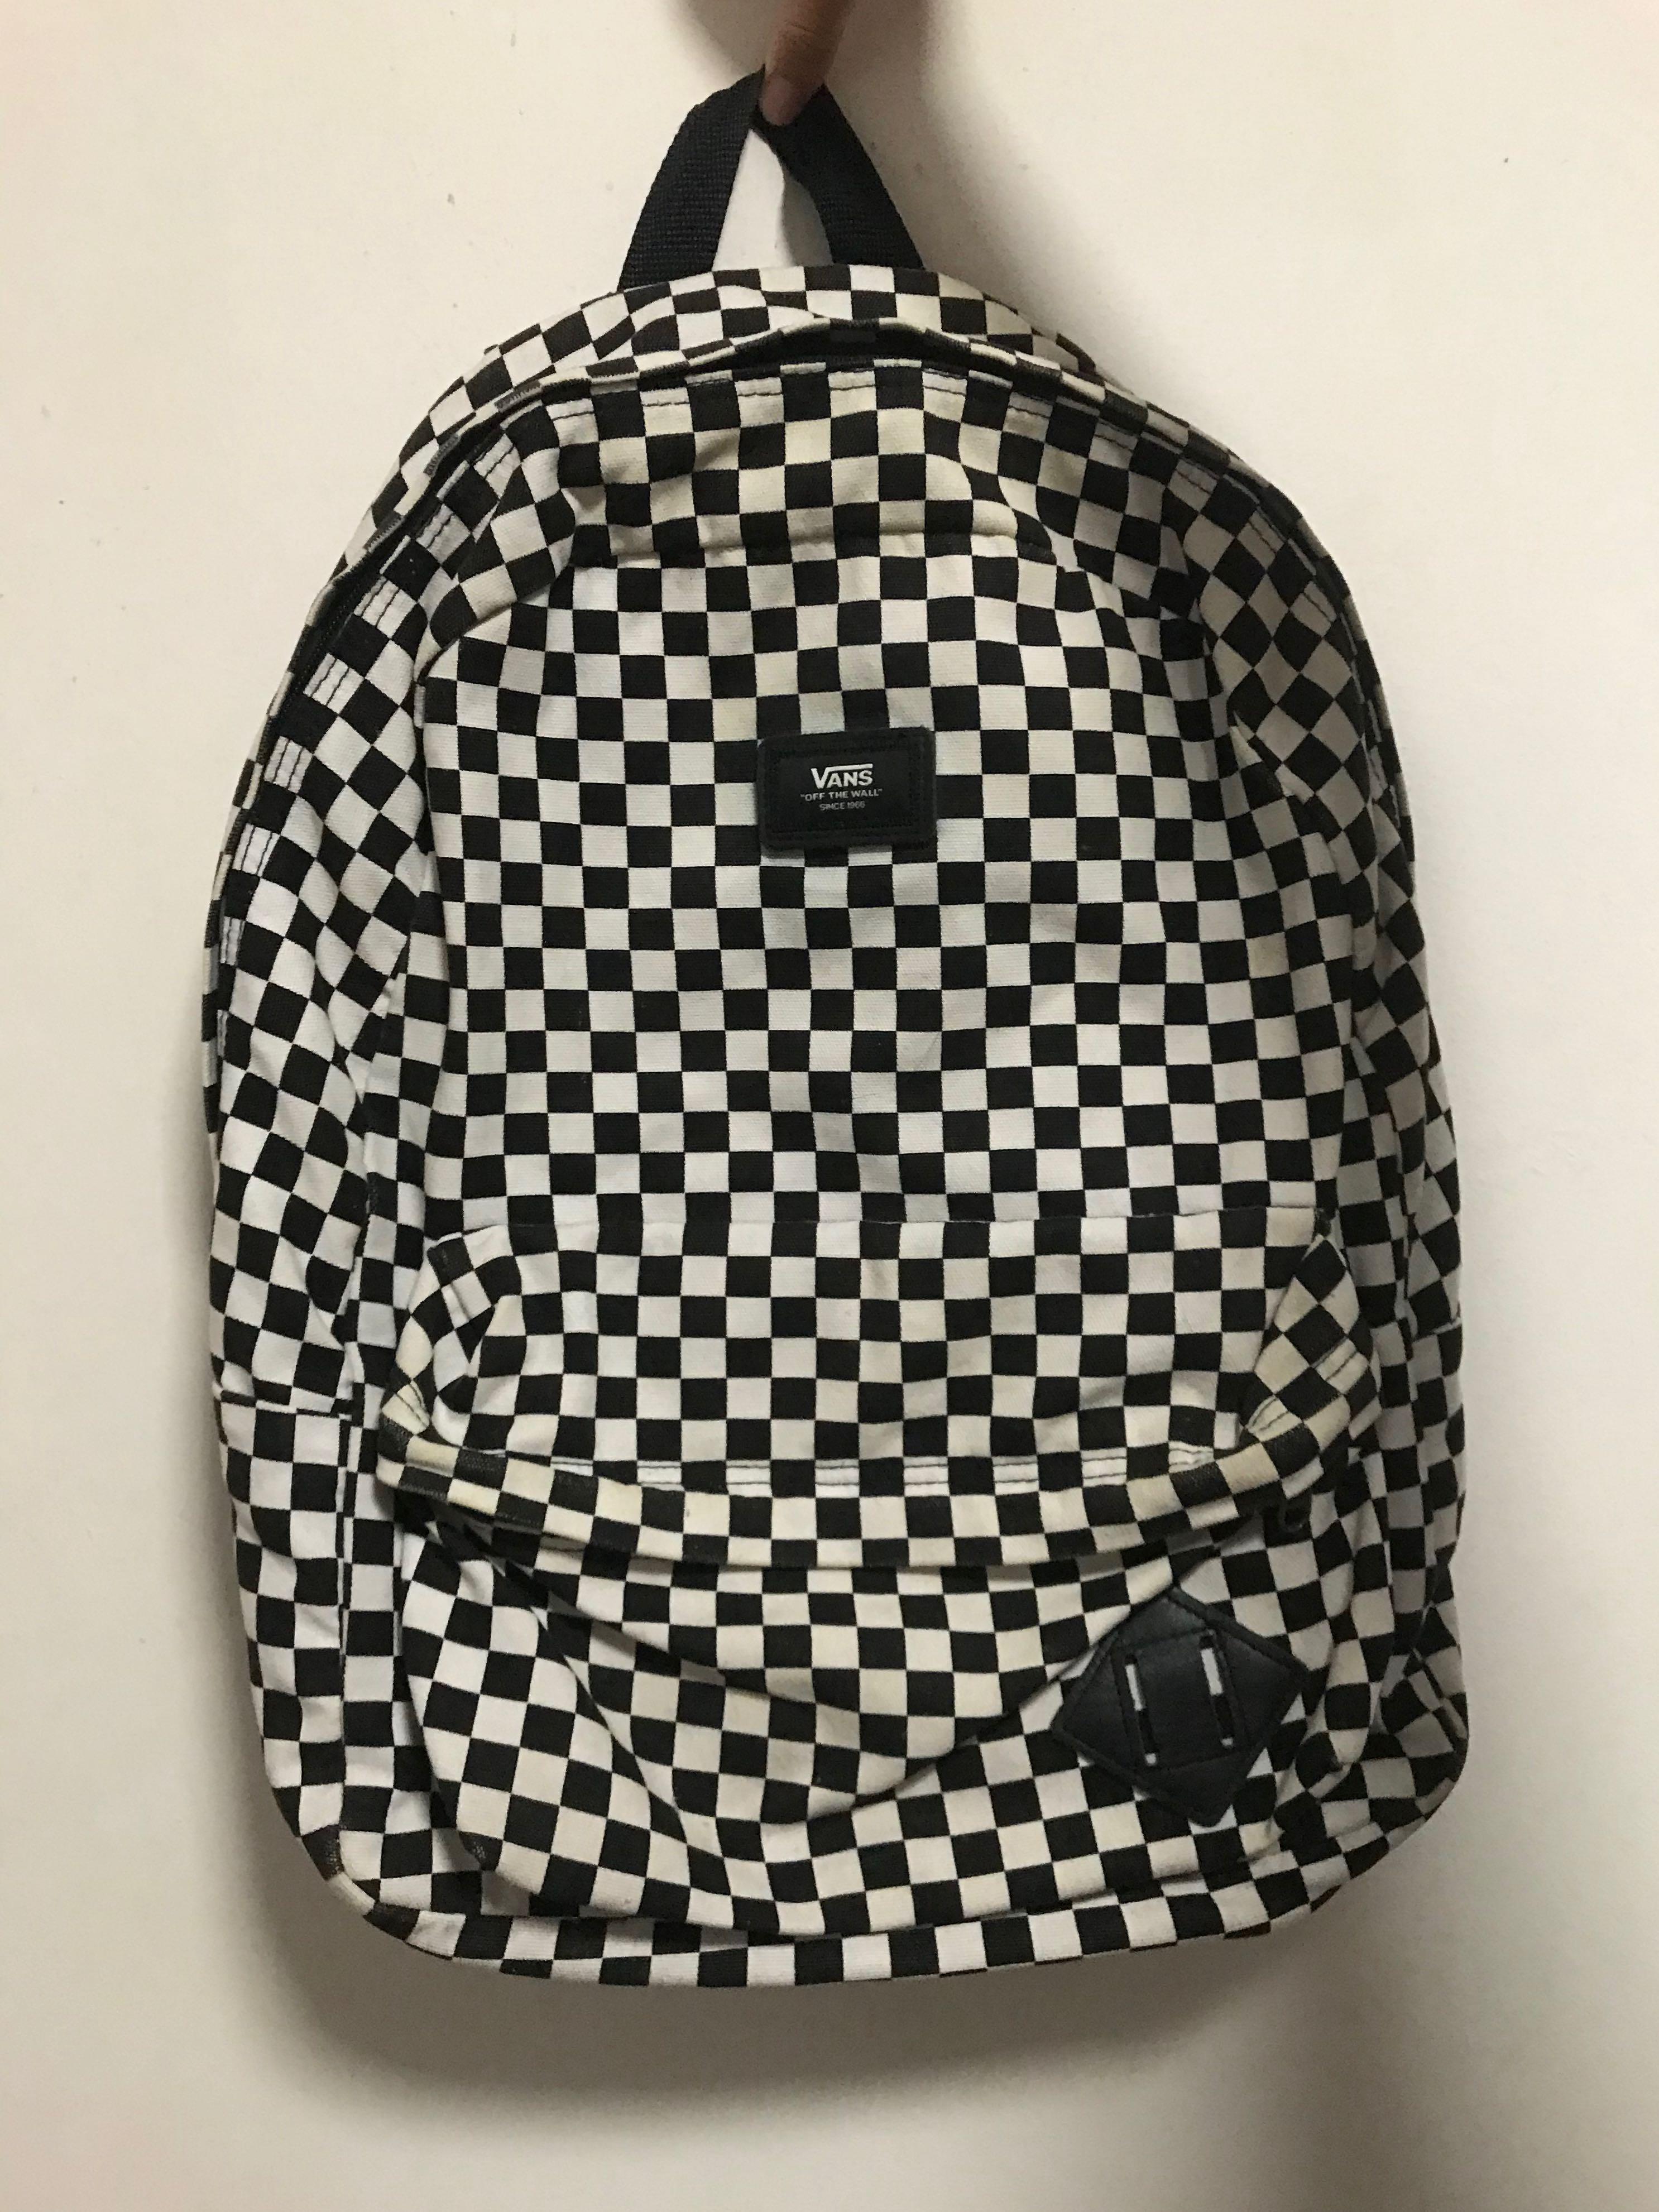 vans checkered bag